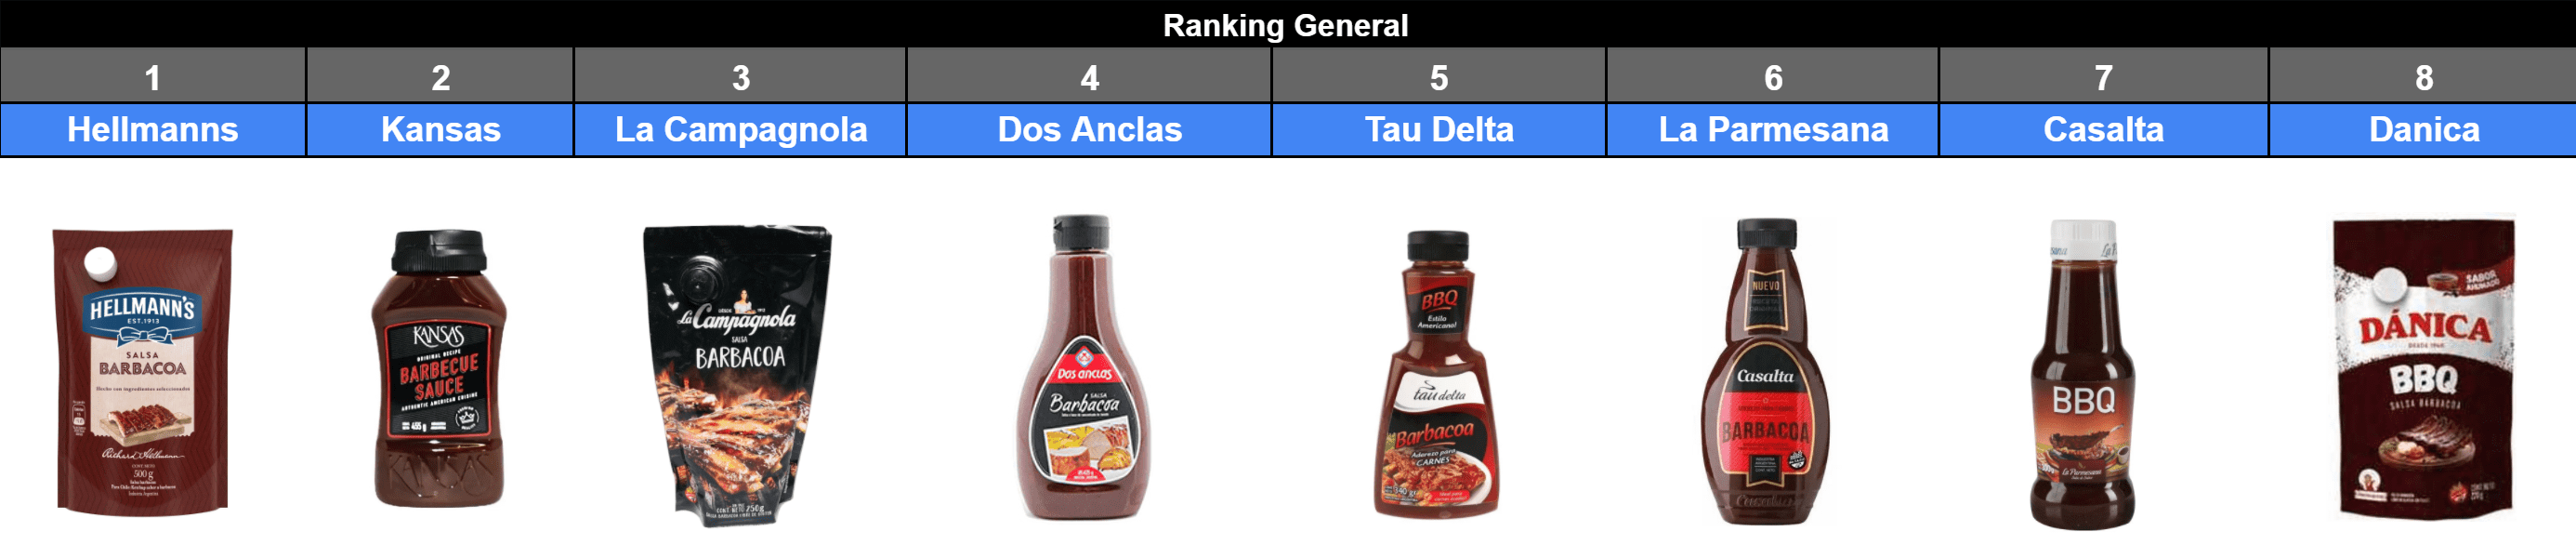 Ranking-General-salsas-barbacoa-torneo-agustincrok